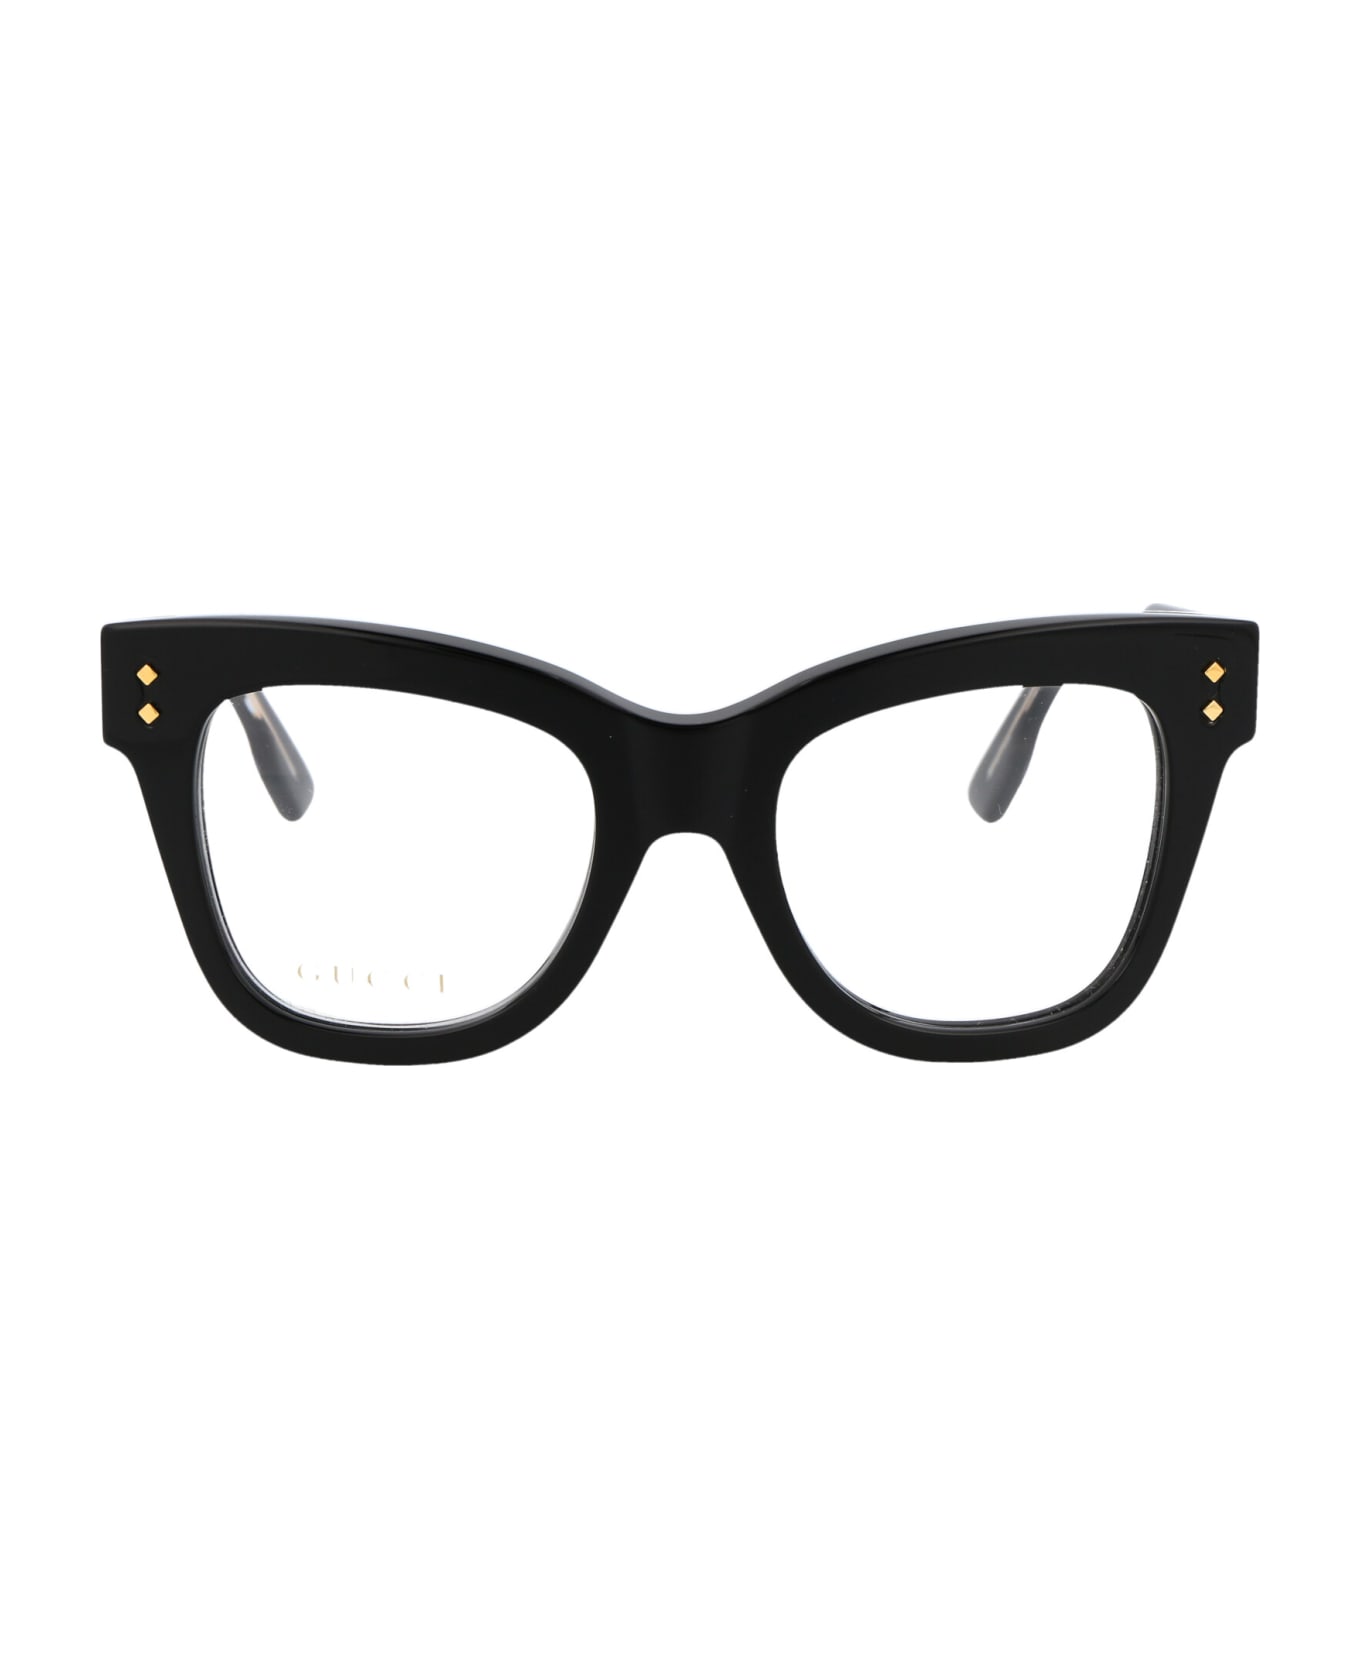 Gucci Eyewear Gg1082o Glasses - 001 BLACK BLACK TRANSPARENT